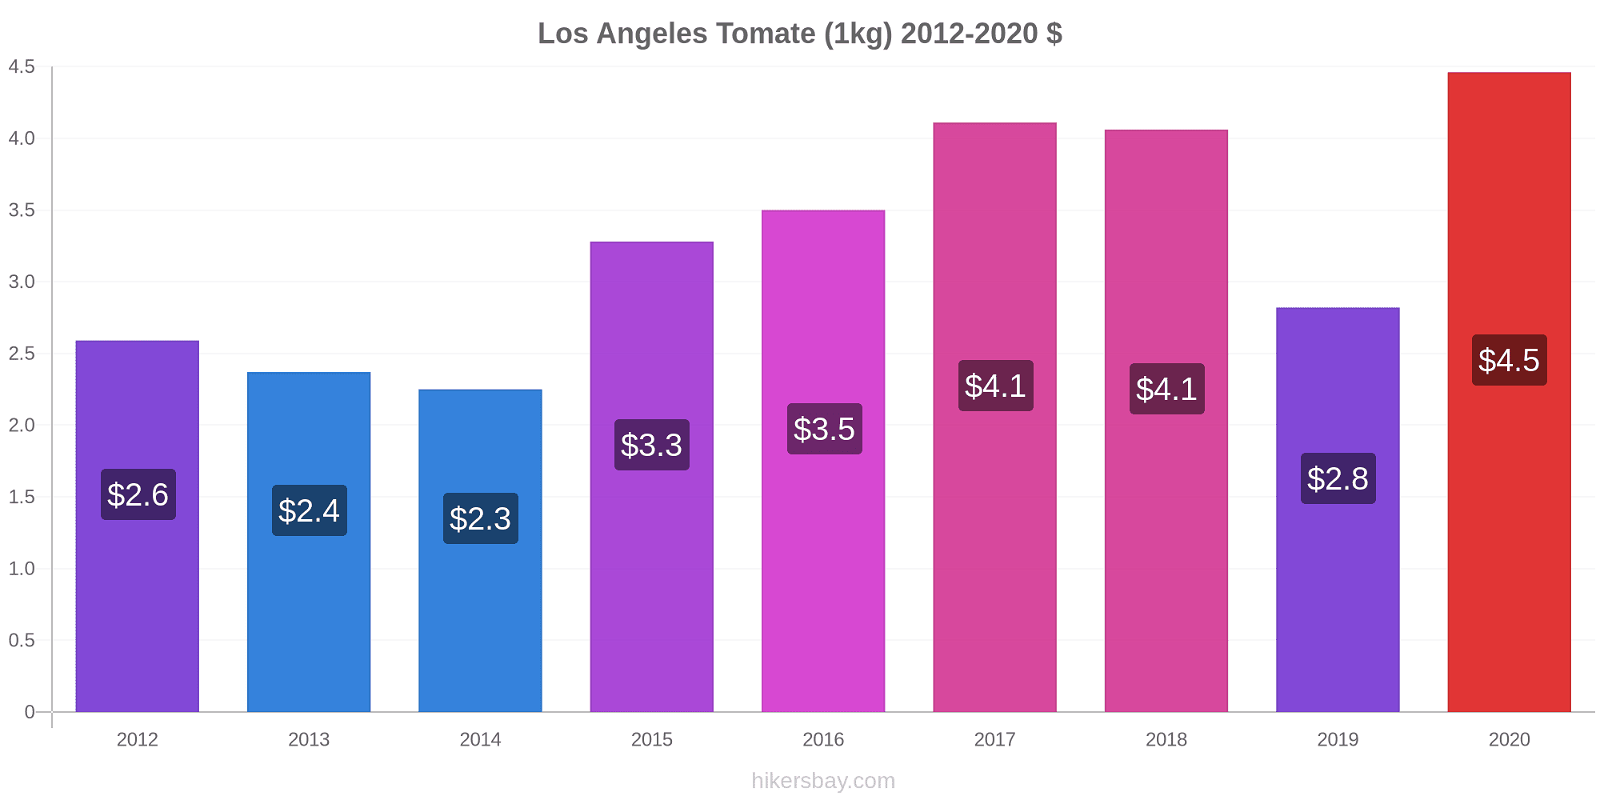 Los Angeles Preisänderungen Tomaten (1kg) hikersbay.com